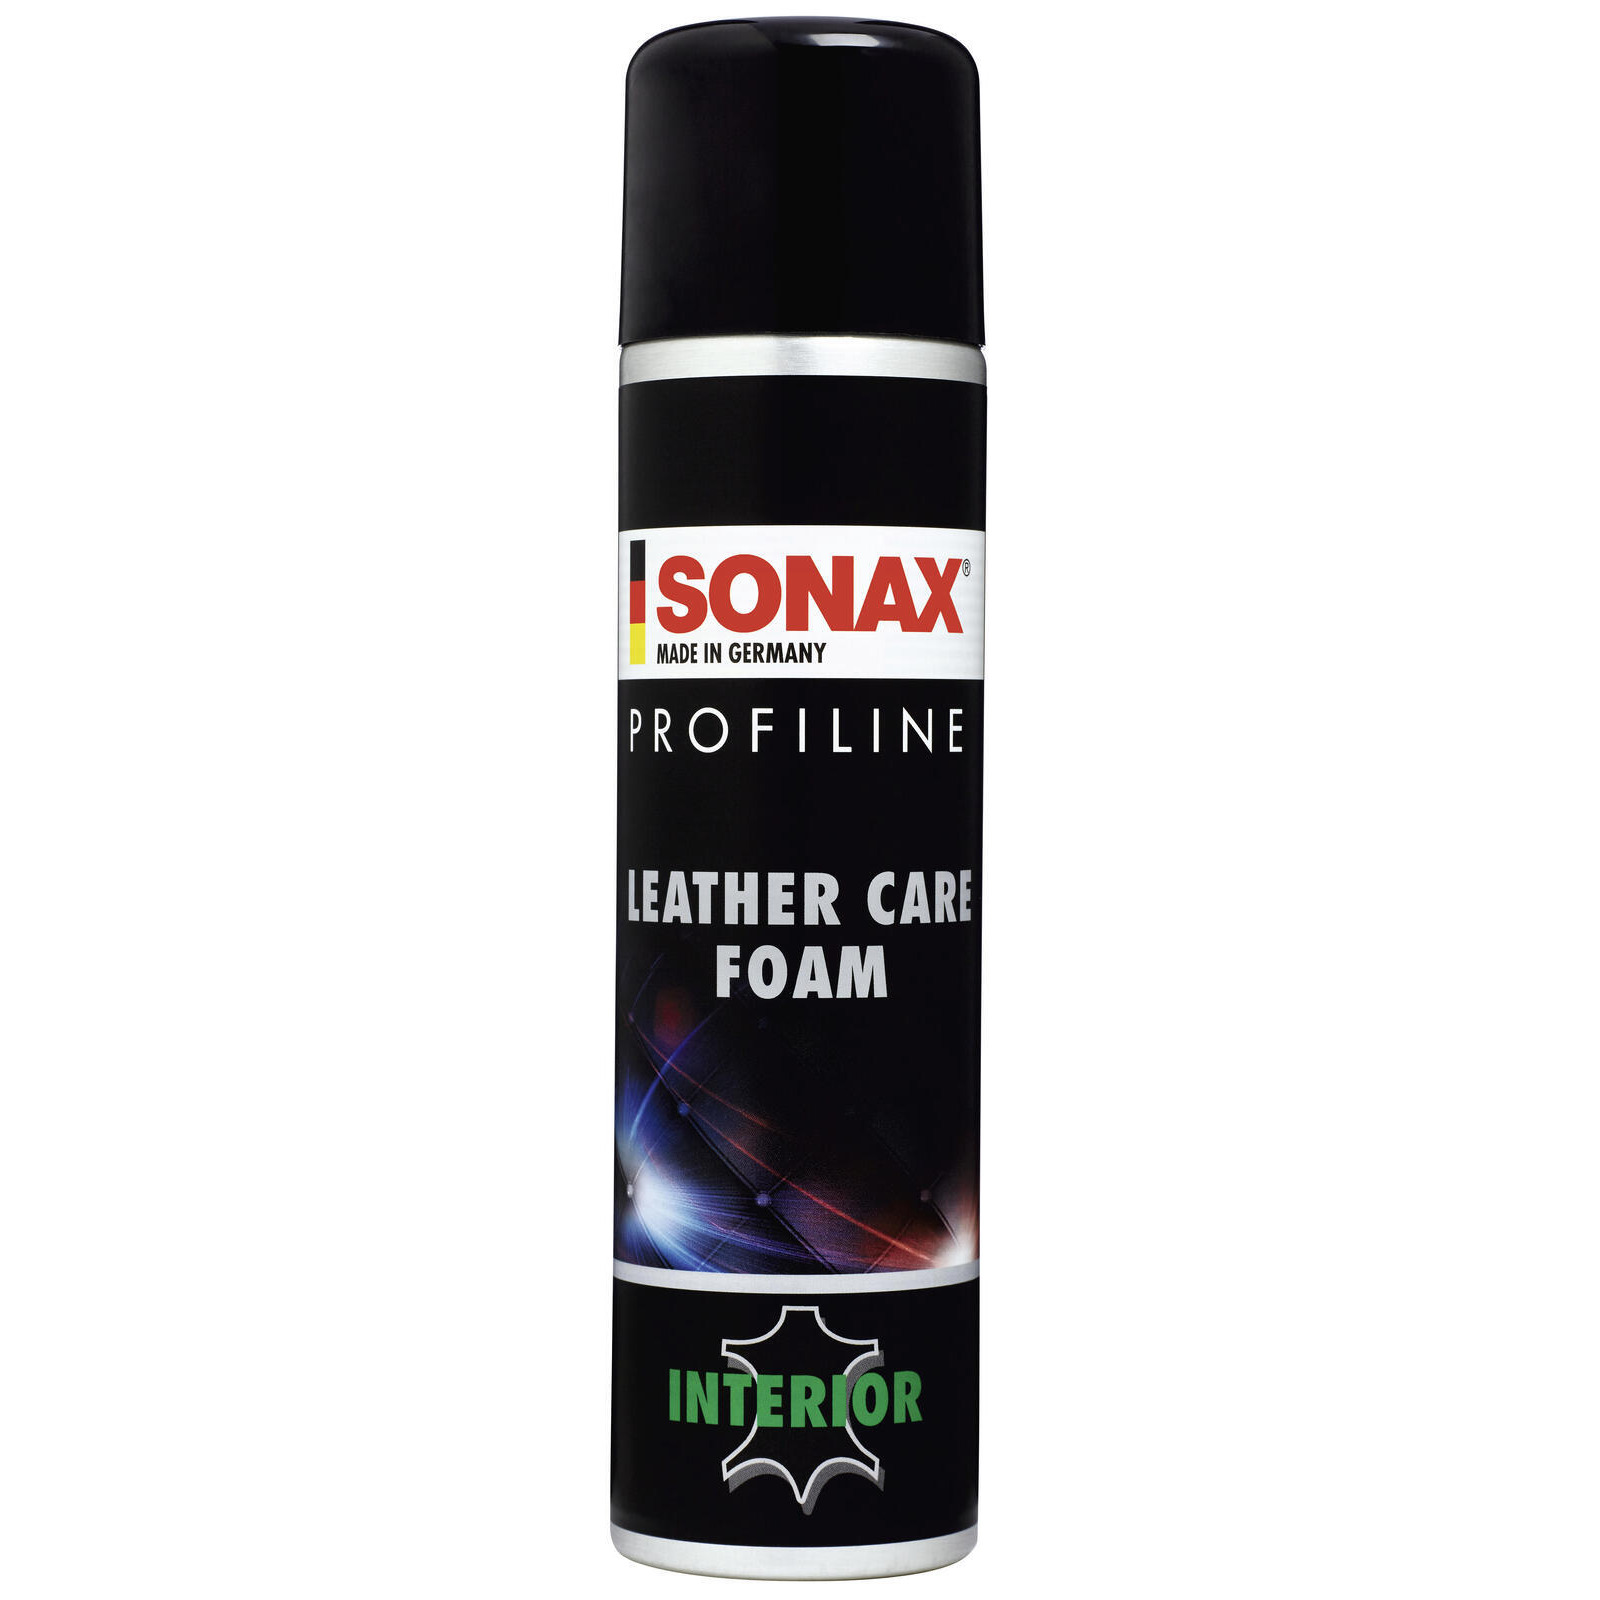 SONAX Leather Care Lotion PROFILINE Leather care foam